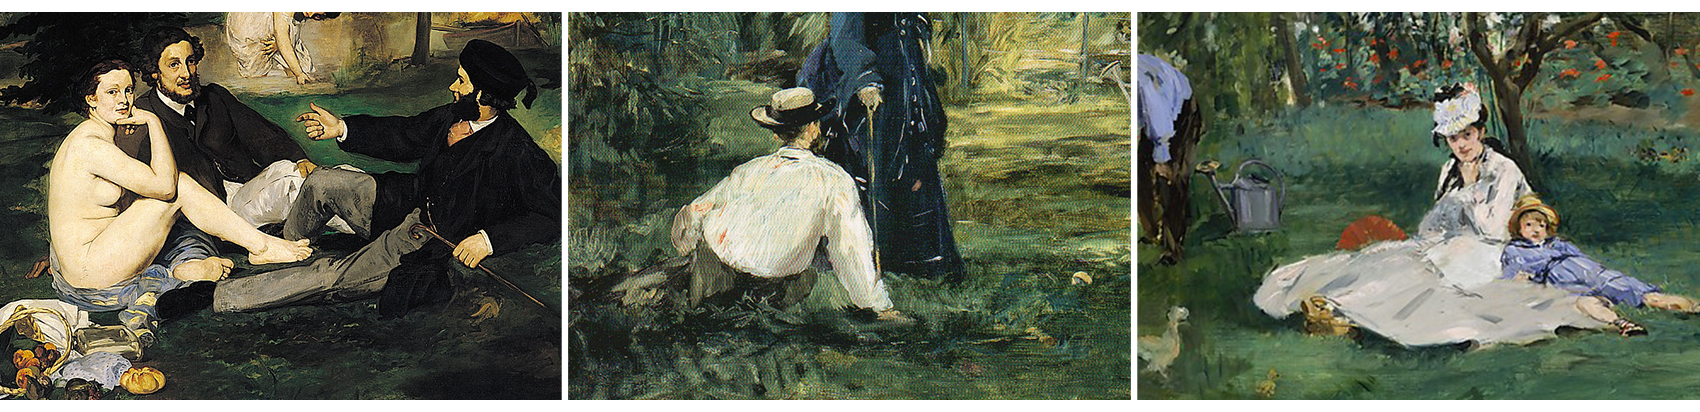 Картины мане. Картина променад Эдуард Мане. Эжен Мане на острове Уайт 1875. Первая картина Эдуарда Мане. Эдуард Мане коллаж.